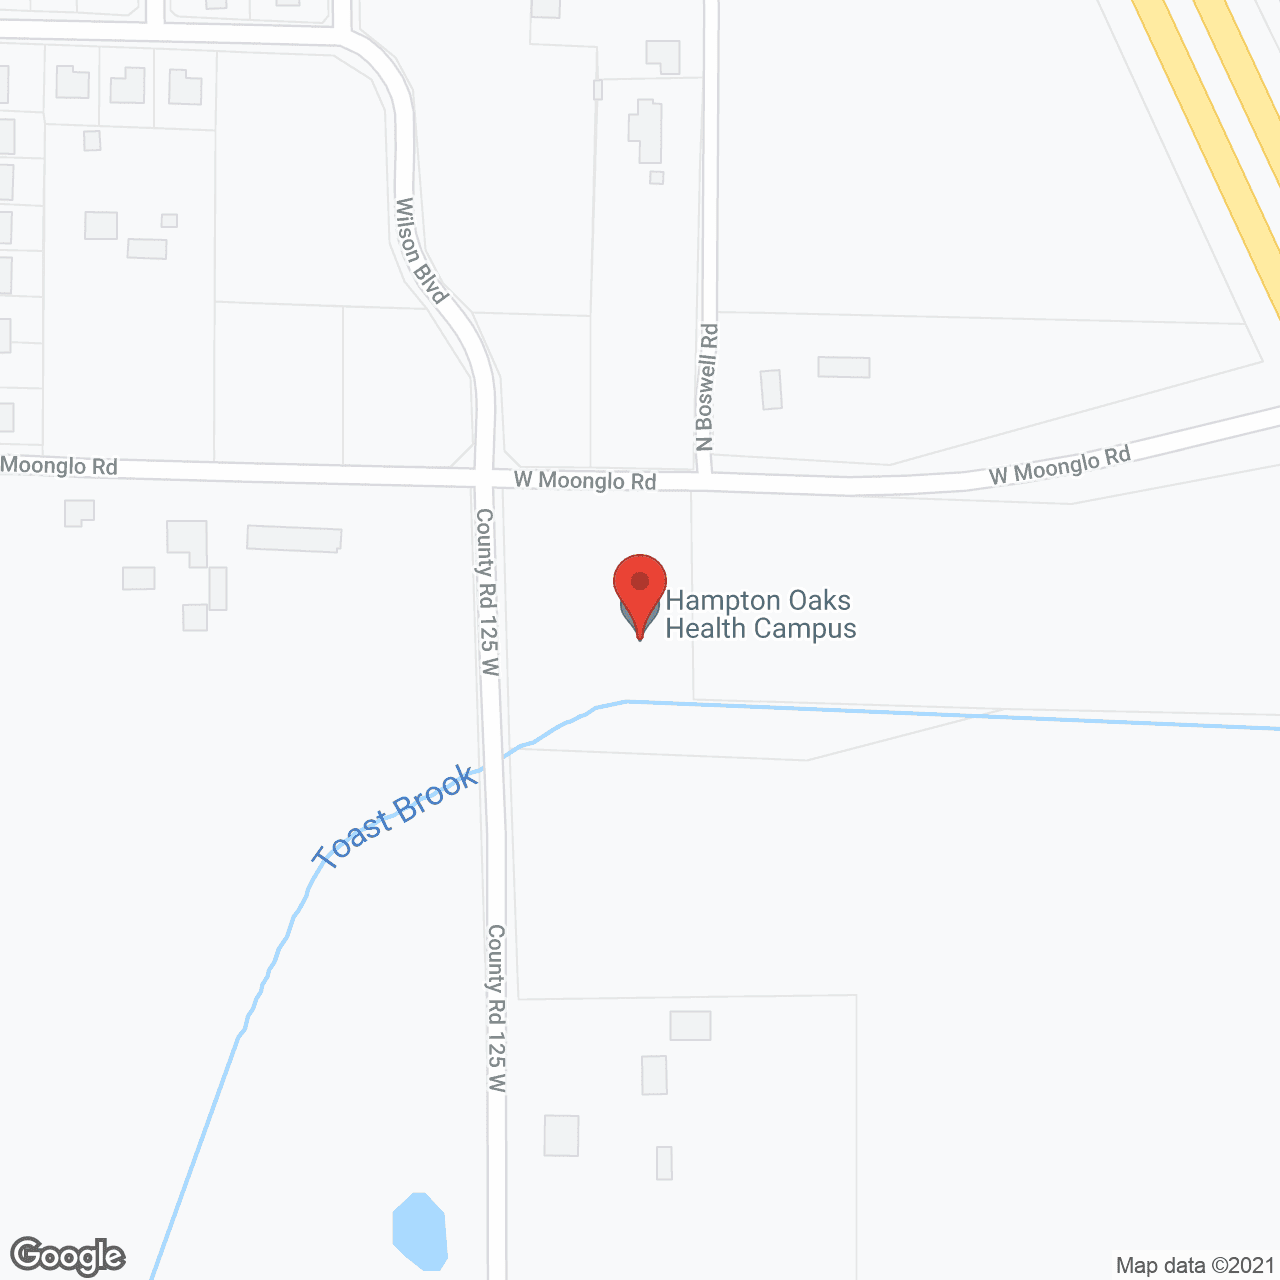 Hampton Oaks Health Campus in google map